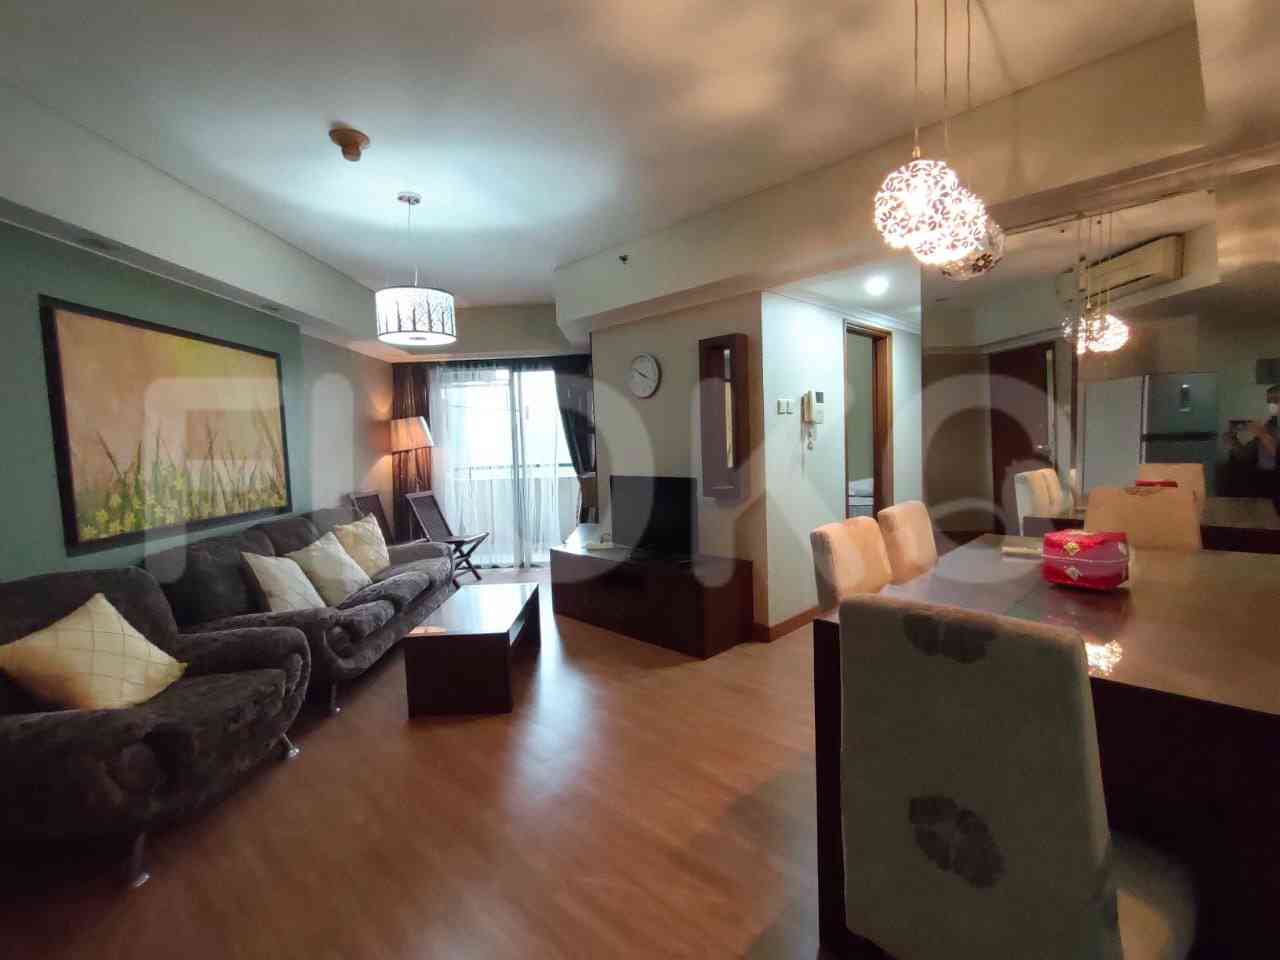 2 Bedroom on 21st Floor for Rent in Aryaduta Suites Semanggi - fsu916 2